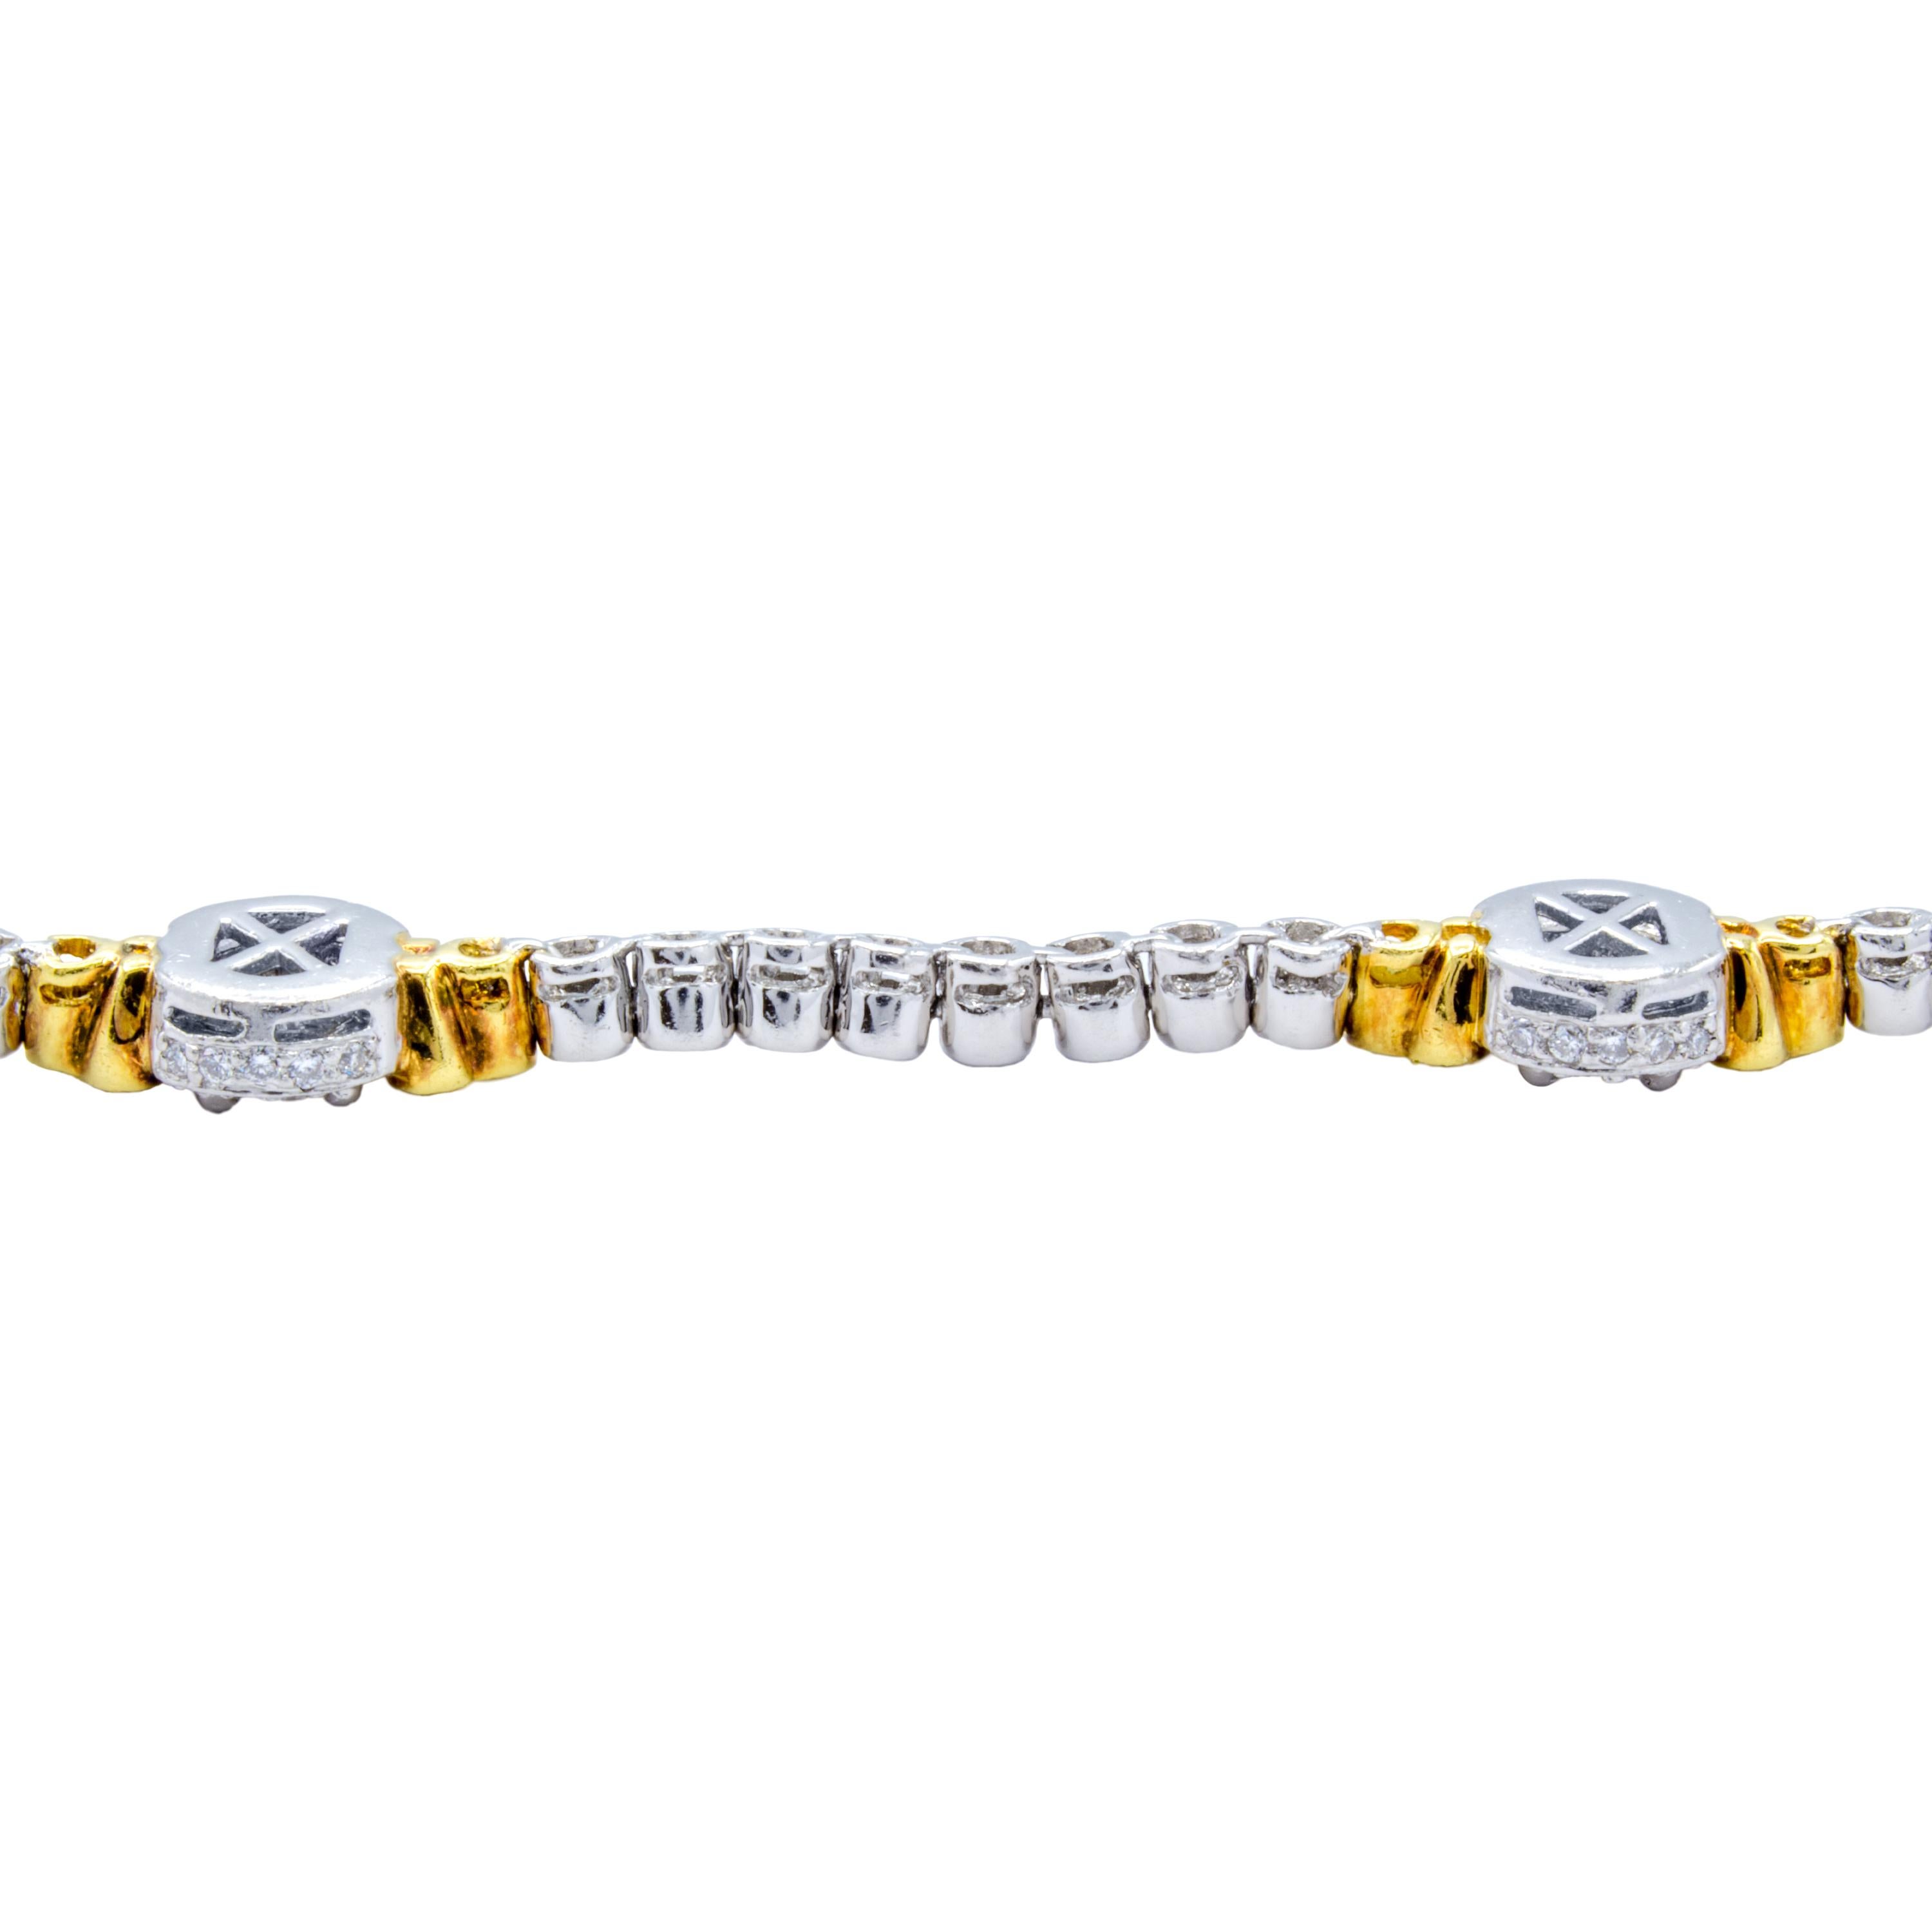 David Rosenberg 3.50 Total Carats White and Fancy Round Diamond Bracelet 1